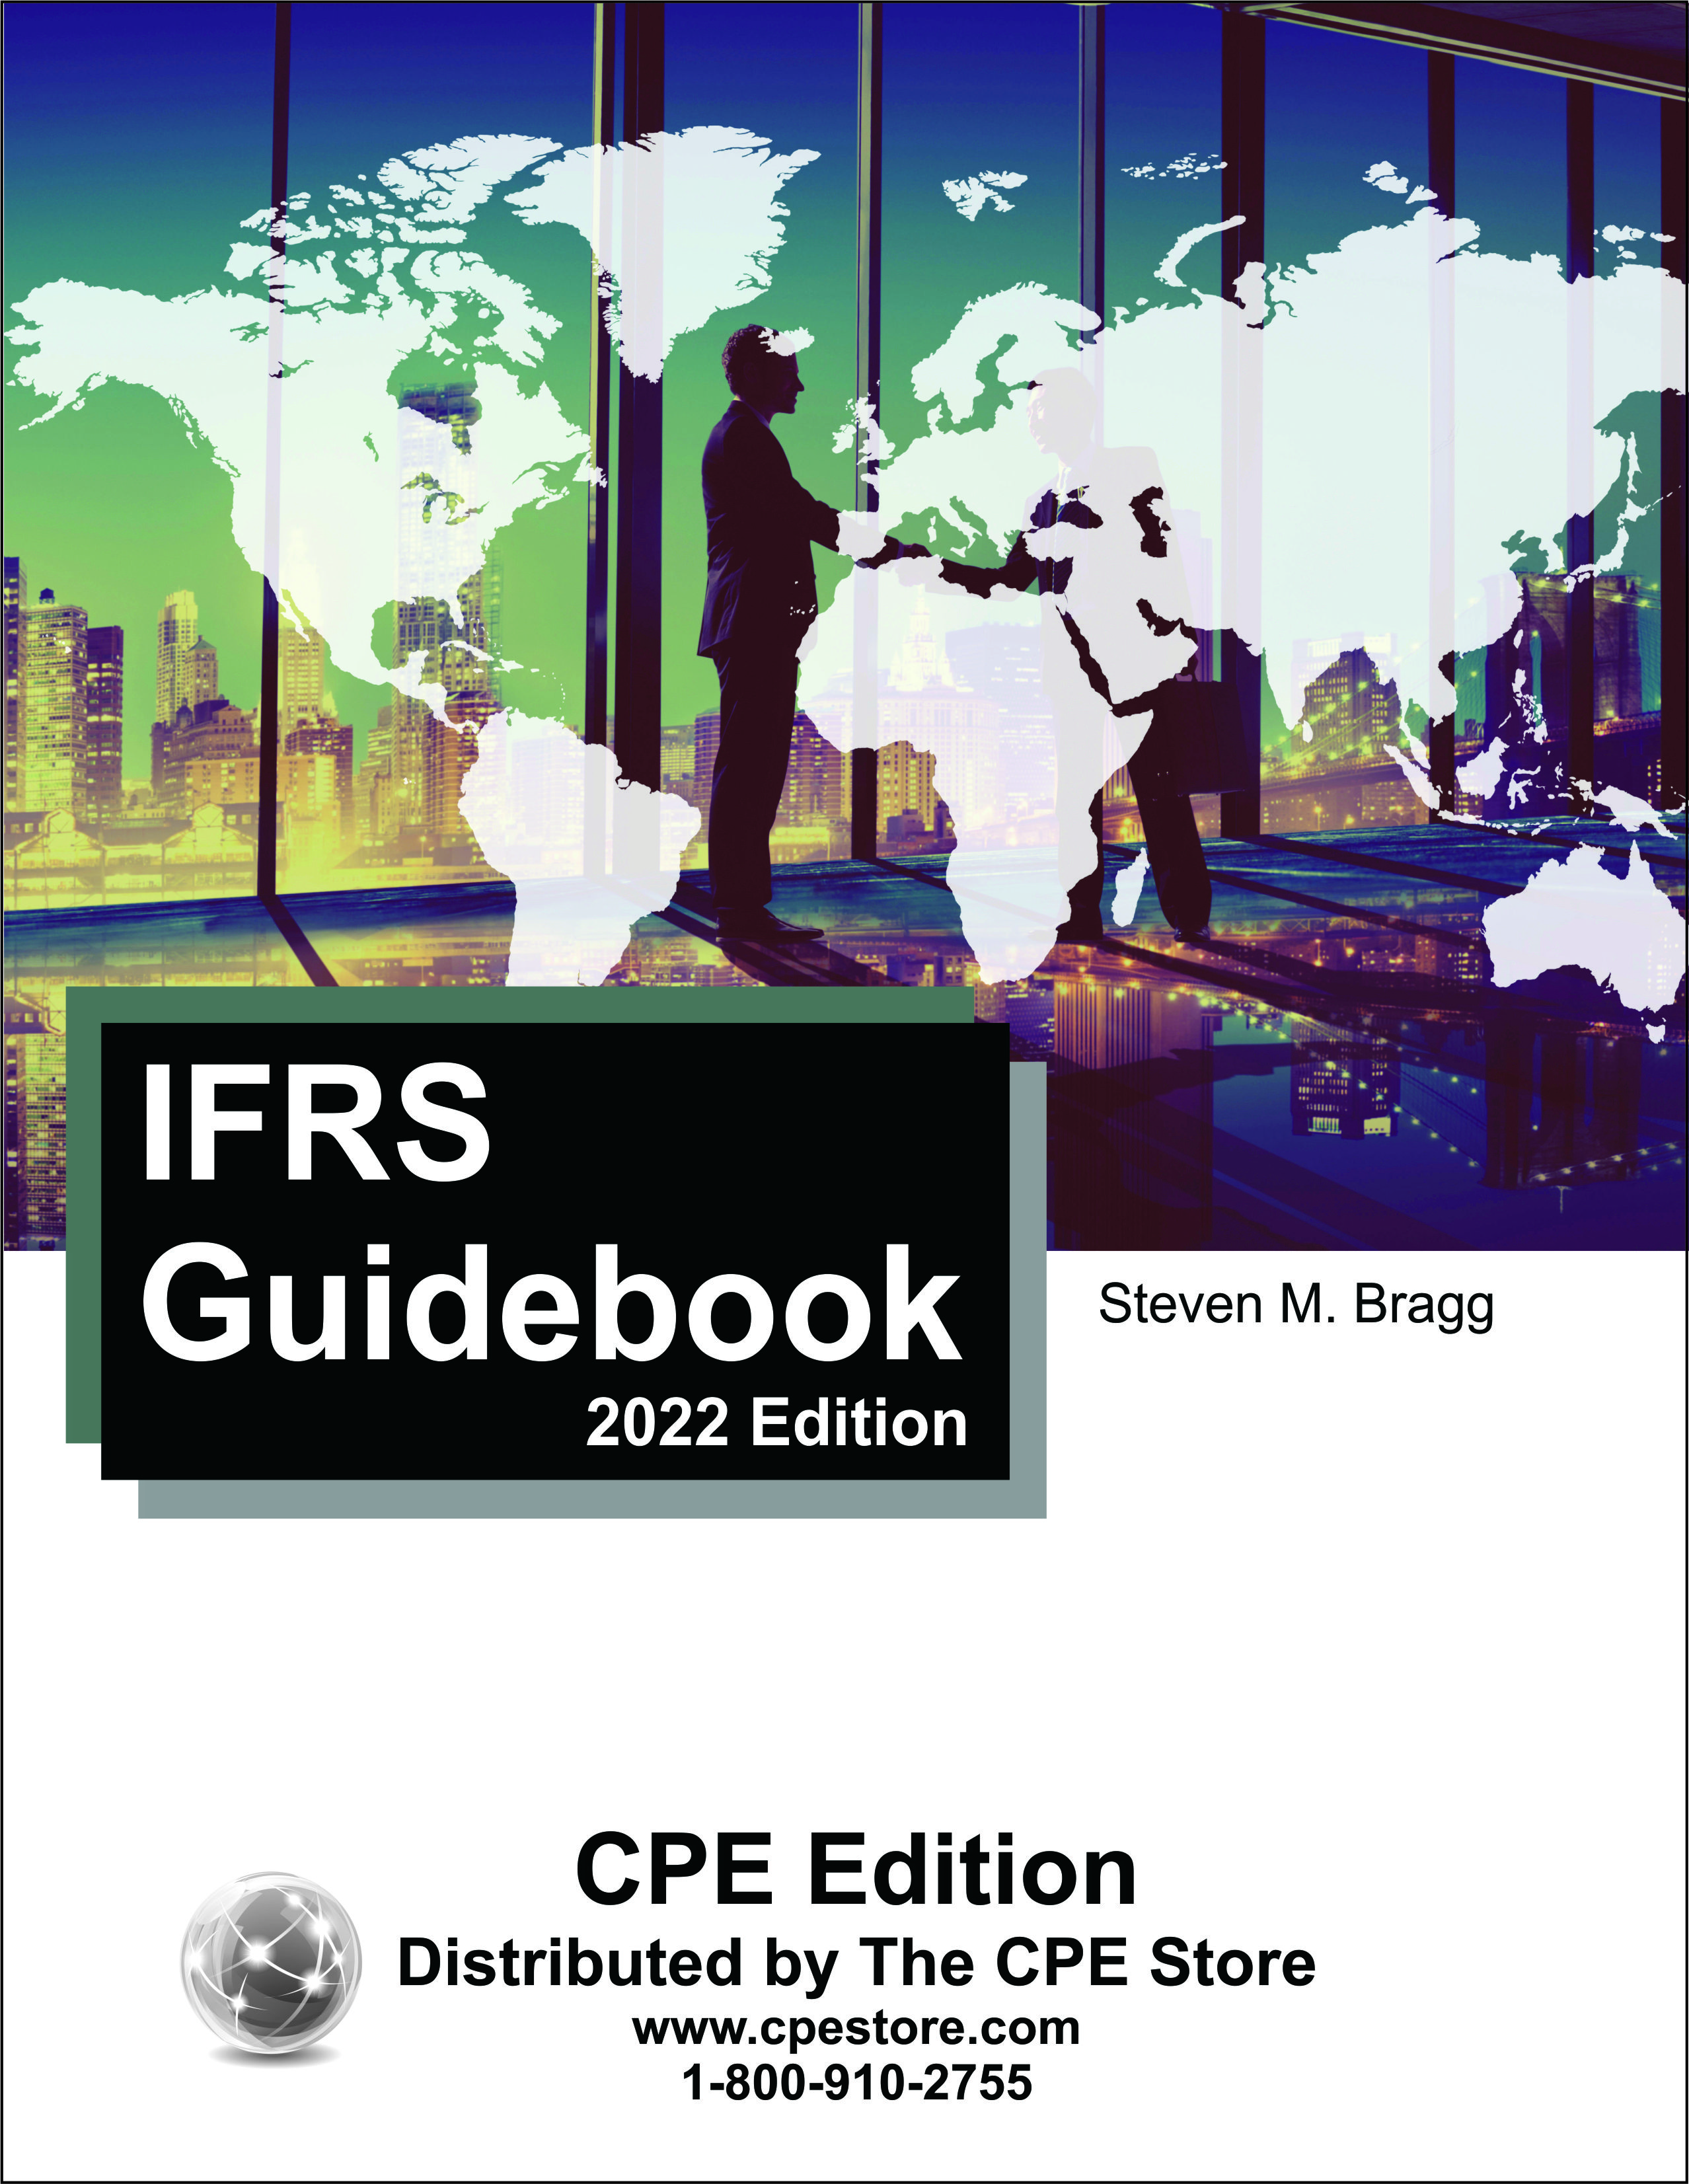 IFRS Guidebook 2022